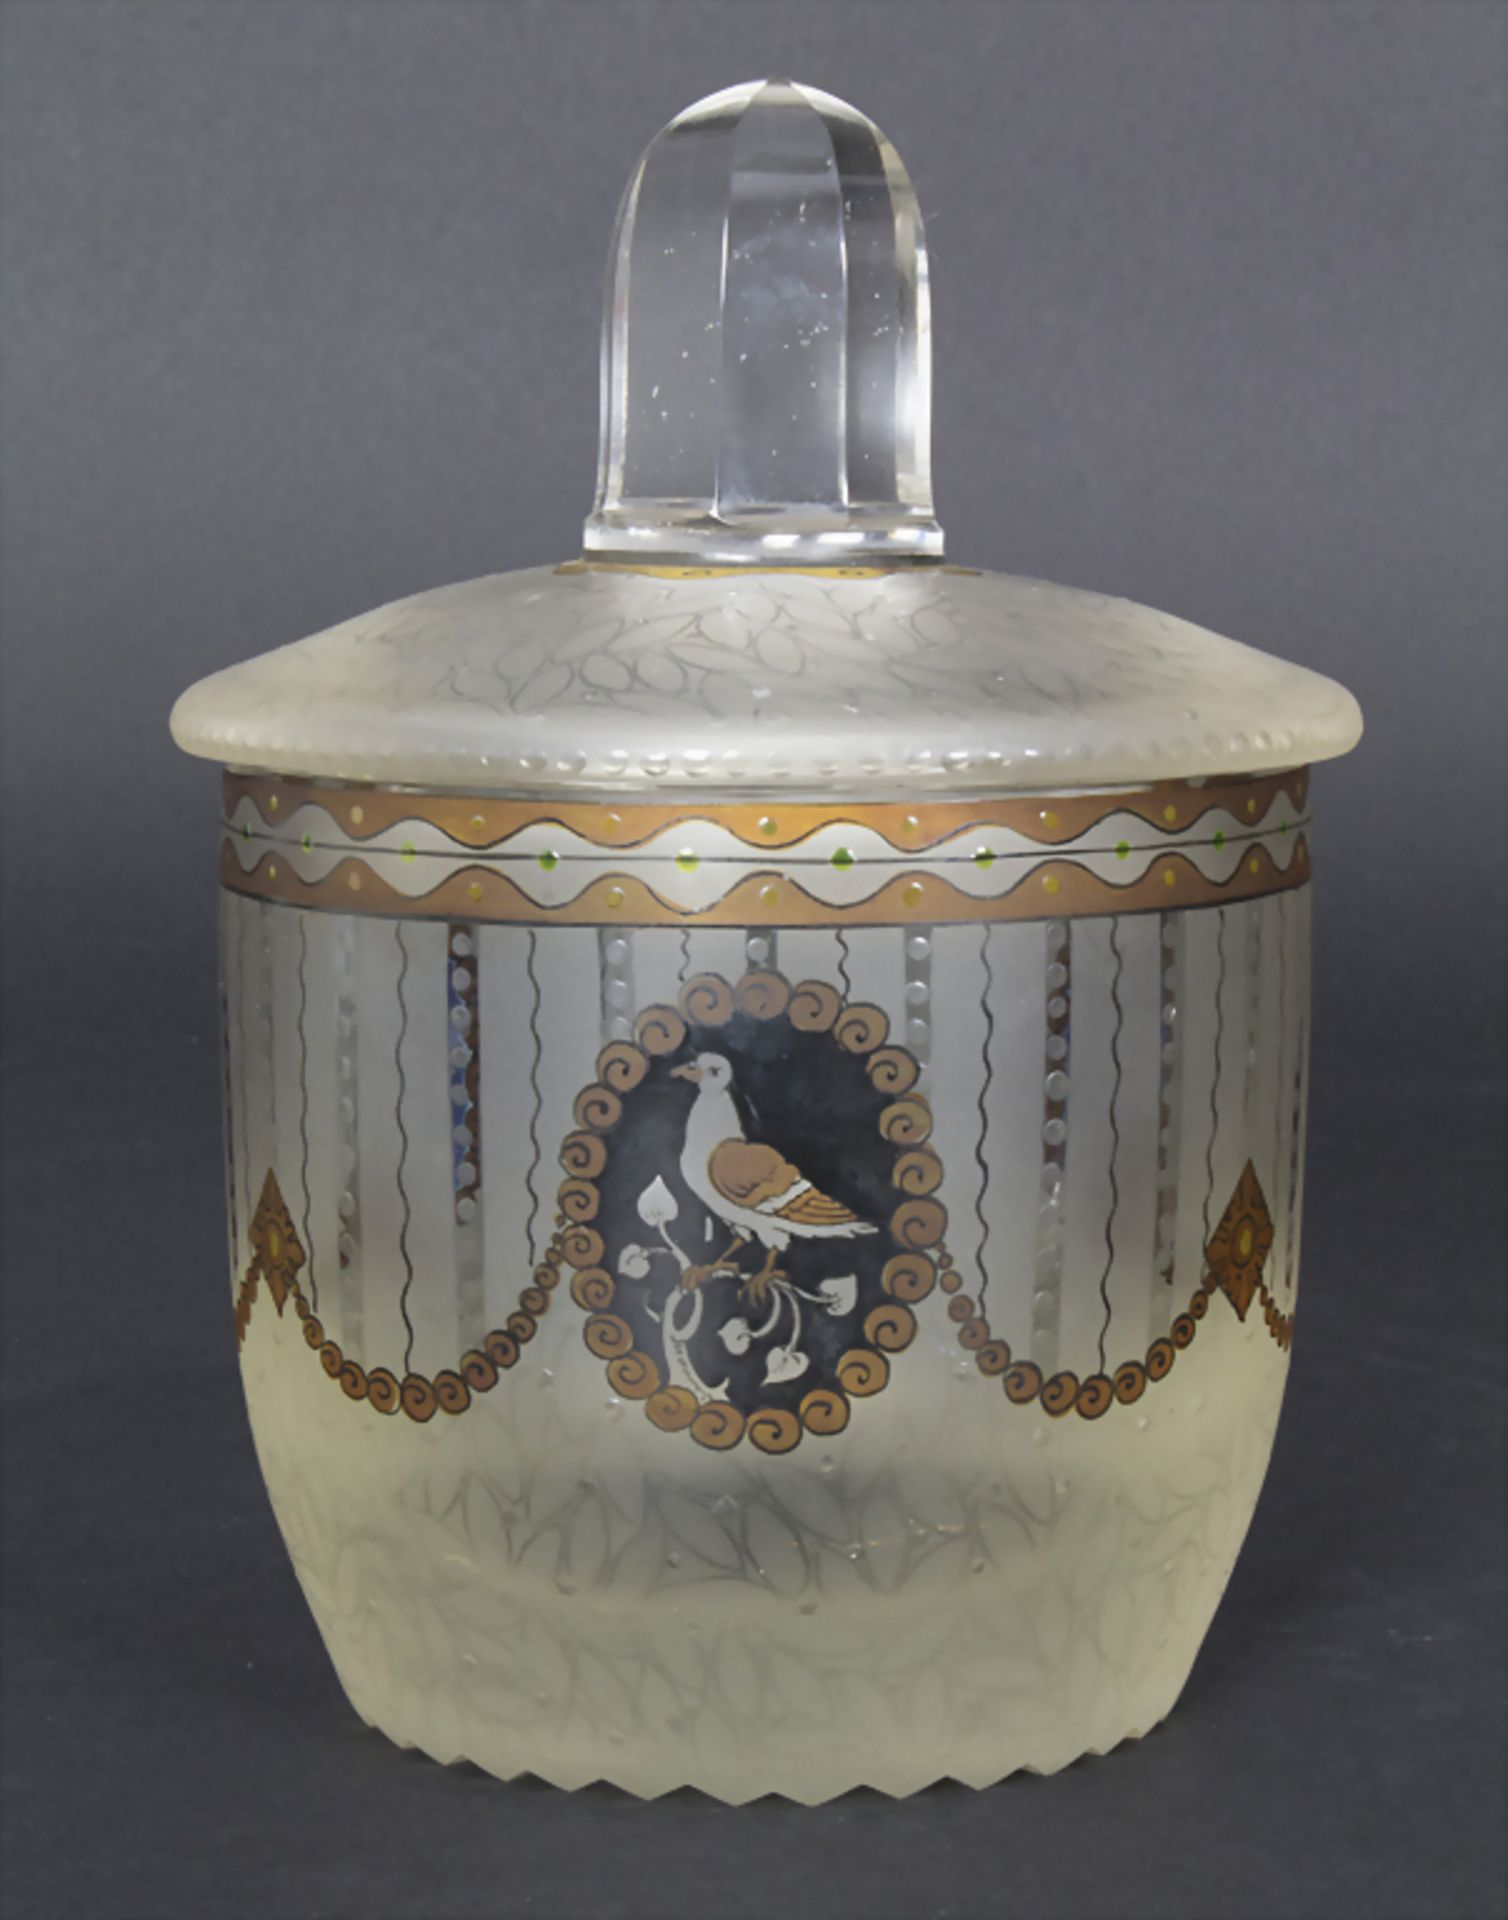 Jugendstil Deckelgefäß mit Transparentemaildekor / An Art Nouveau covered bowl with transparen - Bild 2 aus 5